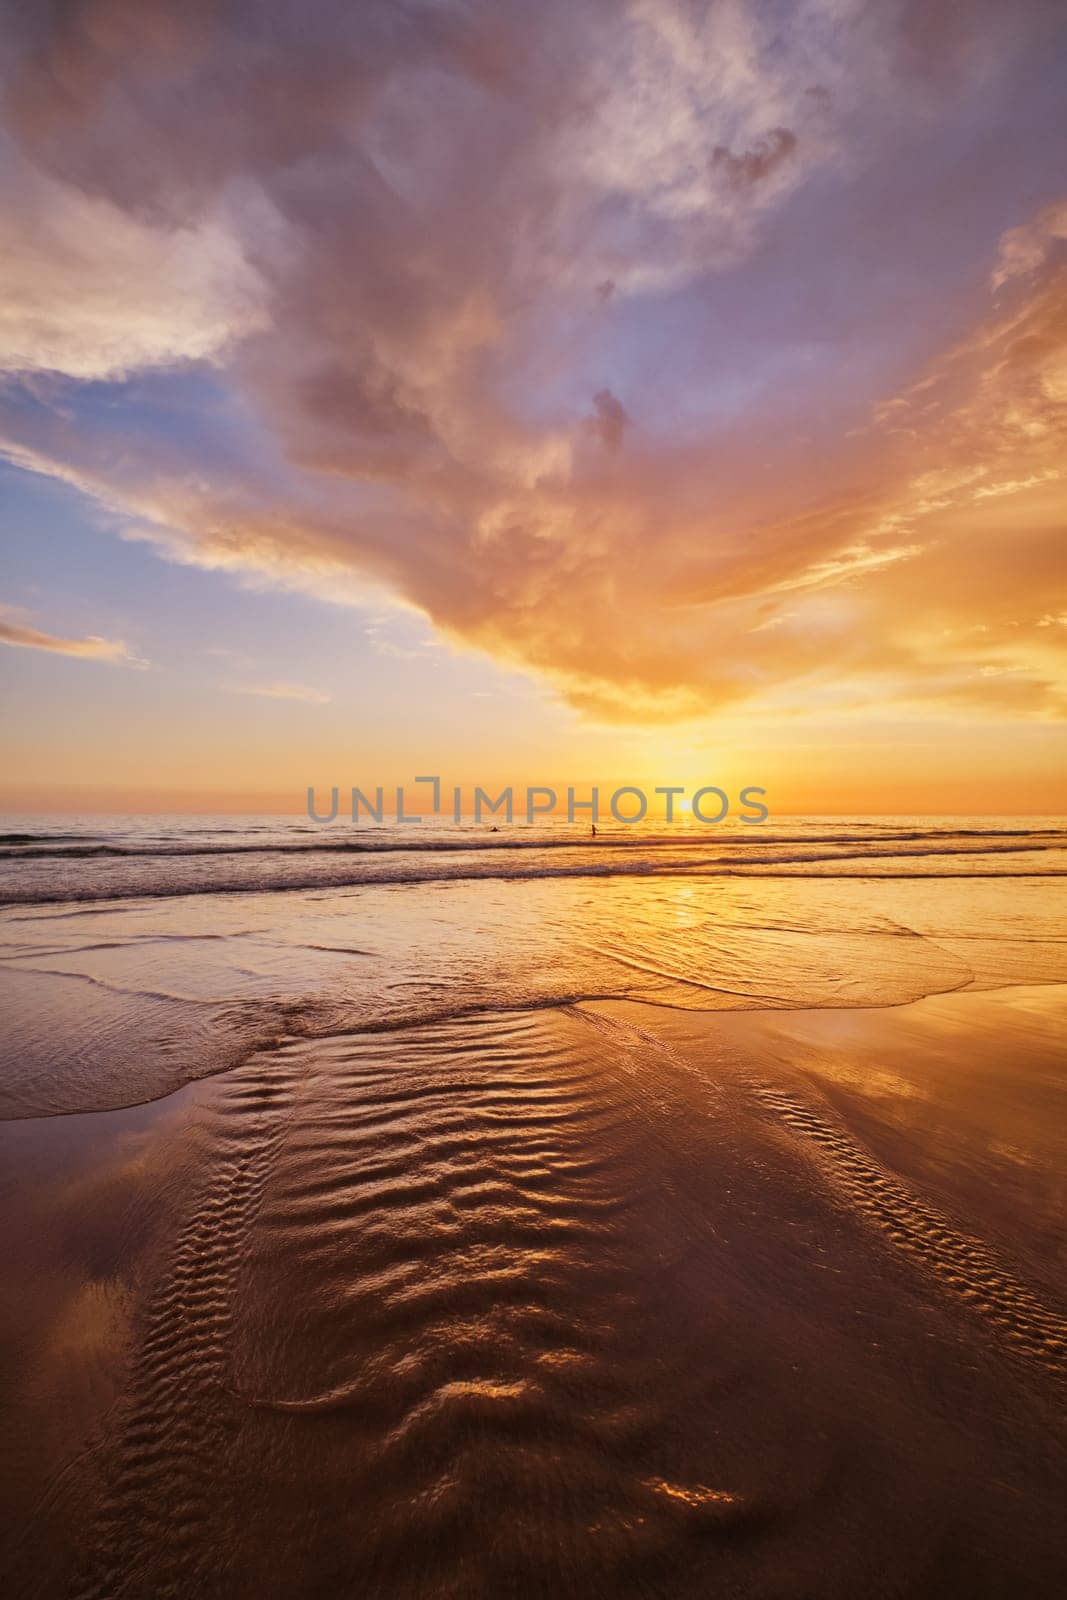 Atlantic ocean sunset with surging waves at Fonte da Telha beach, Portugal by dimol